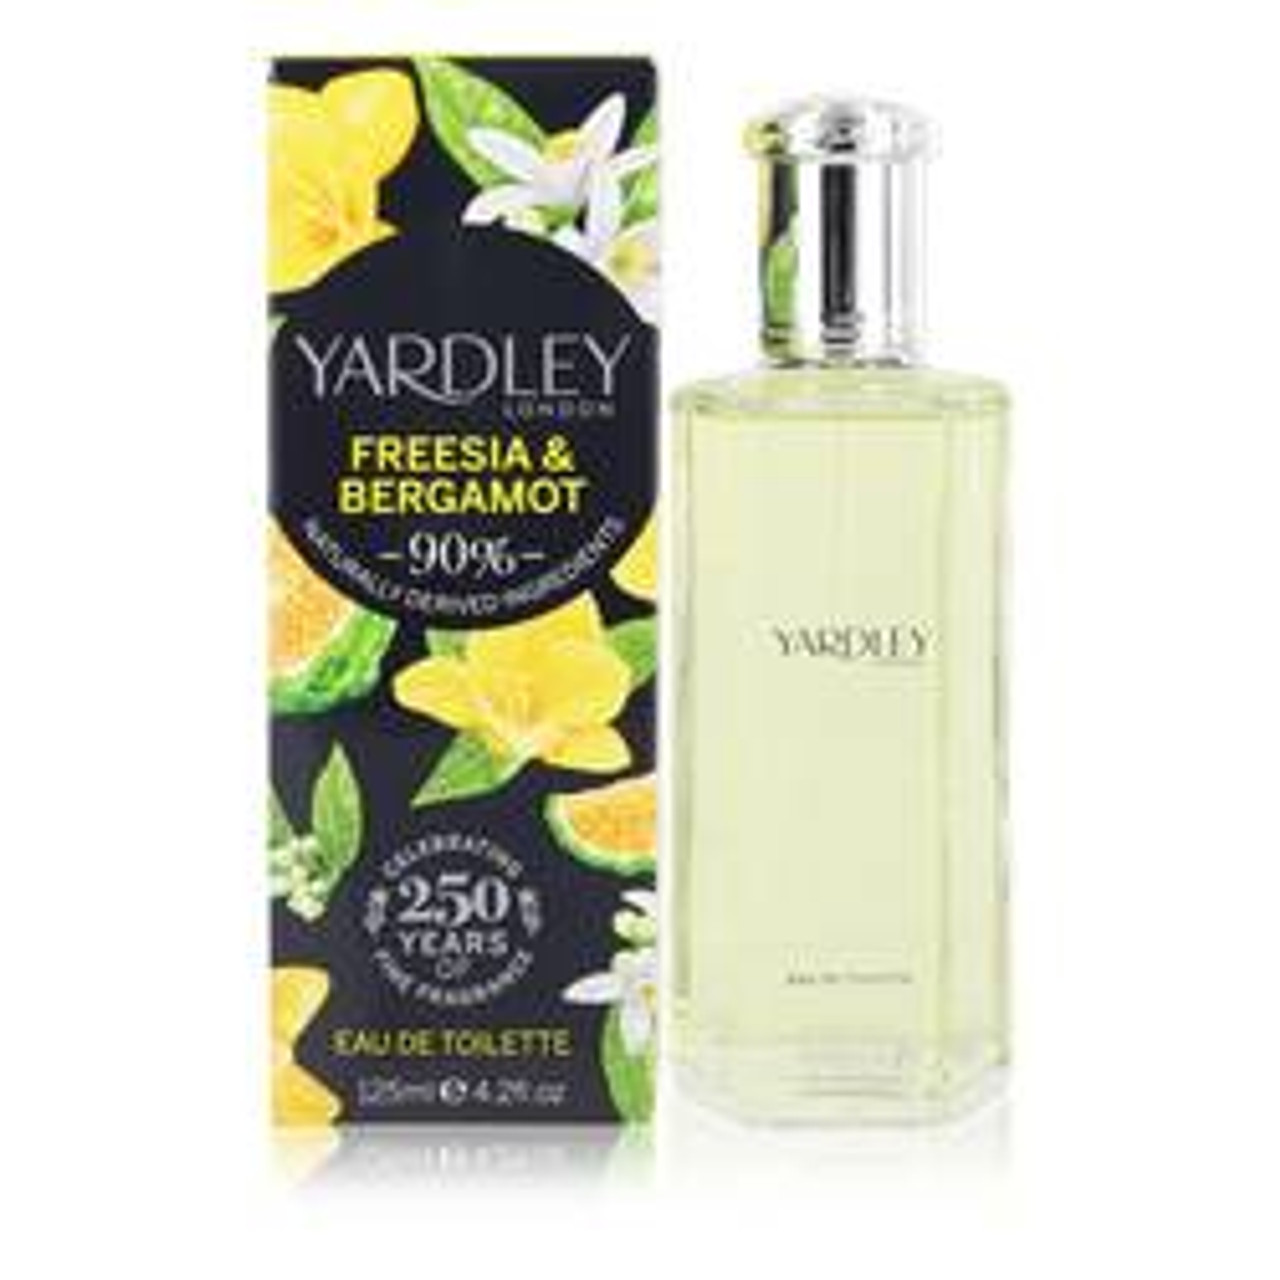 Yardley Freesia & Bergamot Perfume By Yardley London Eau De Toilette Spray 4.2 oz for Women - [From 59.00 - Choose pk Qty ] - *Ships from Miami